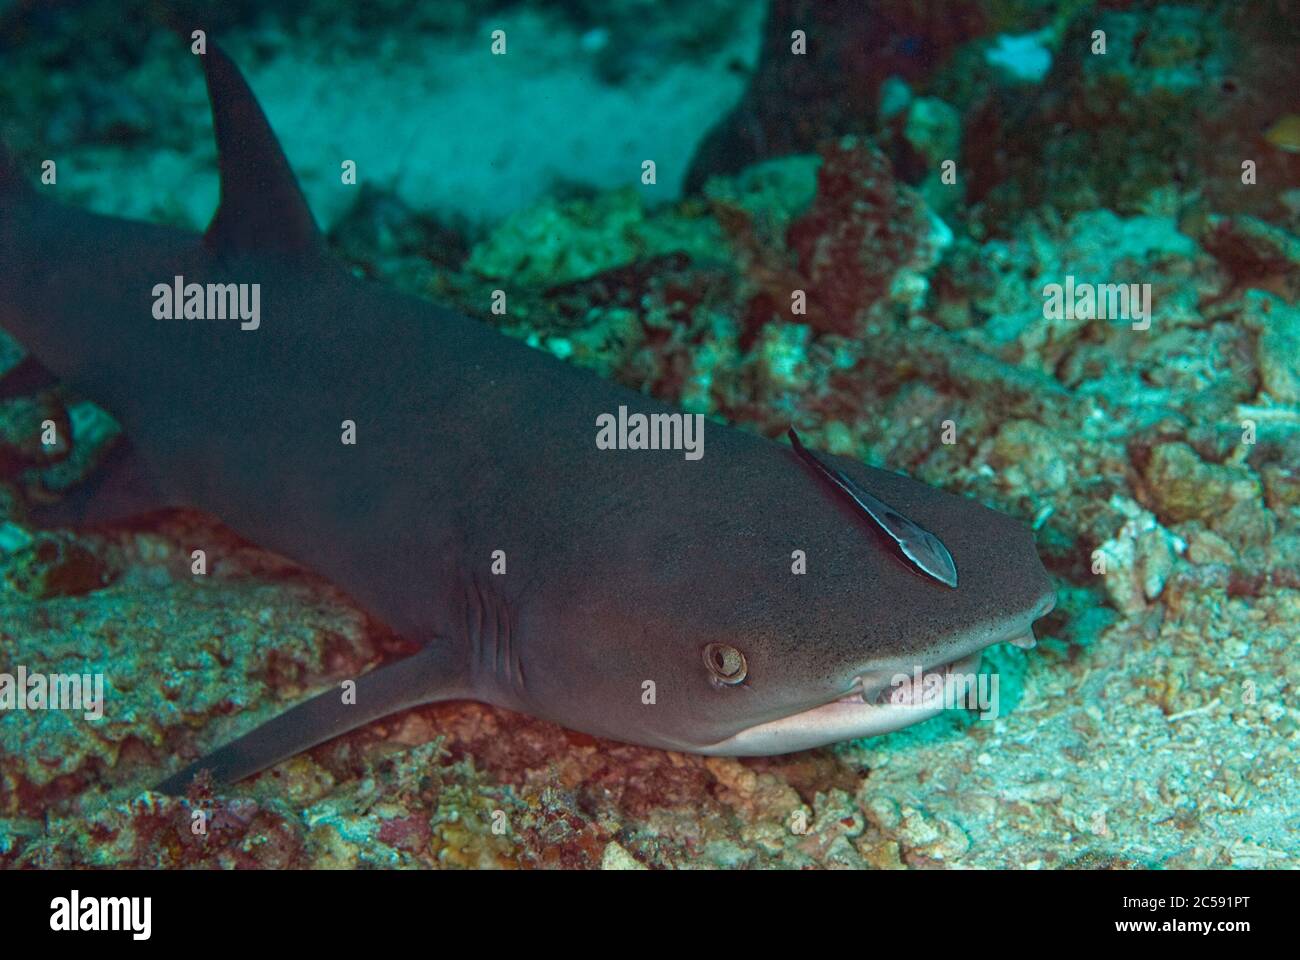 Whitetip Reef Shark, Triaenodon obesus, Near Threatened, with Sharksucker, Echeneis naucrates, Echeneidae family, Barracuda Point dive site, Sipadan Stock Photo